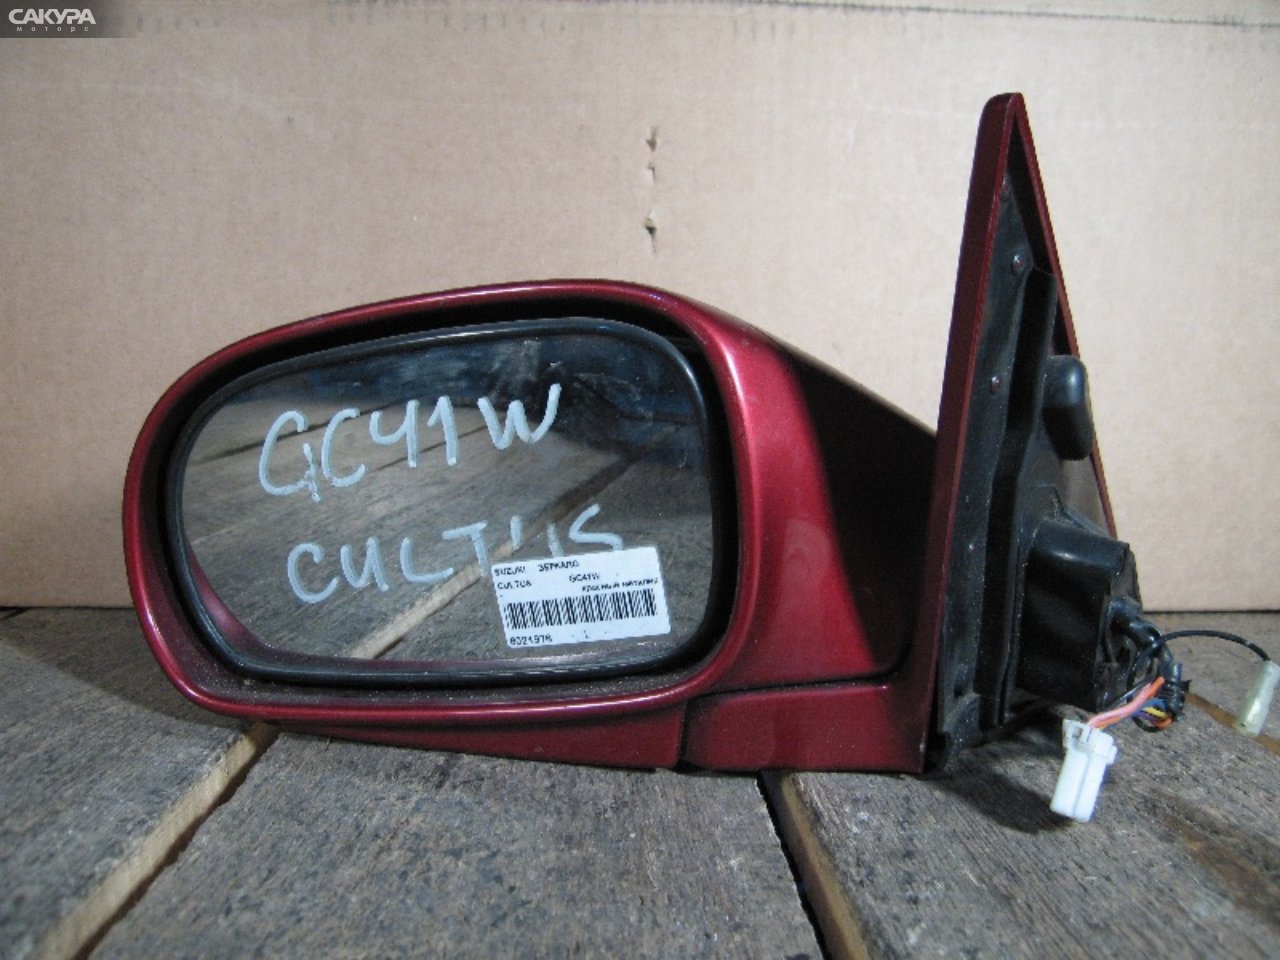 Зеркало боковое левое Suzuki Cultus GC41W: купить в Сакура Абакан.